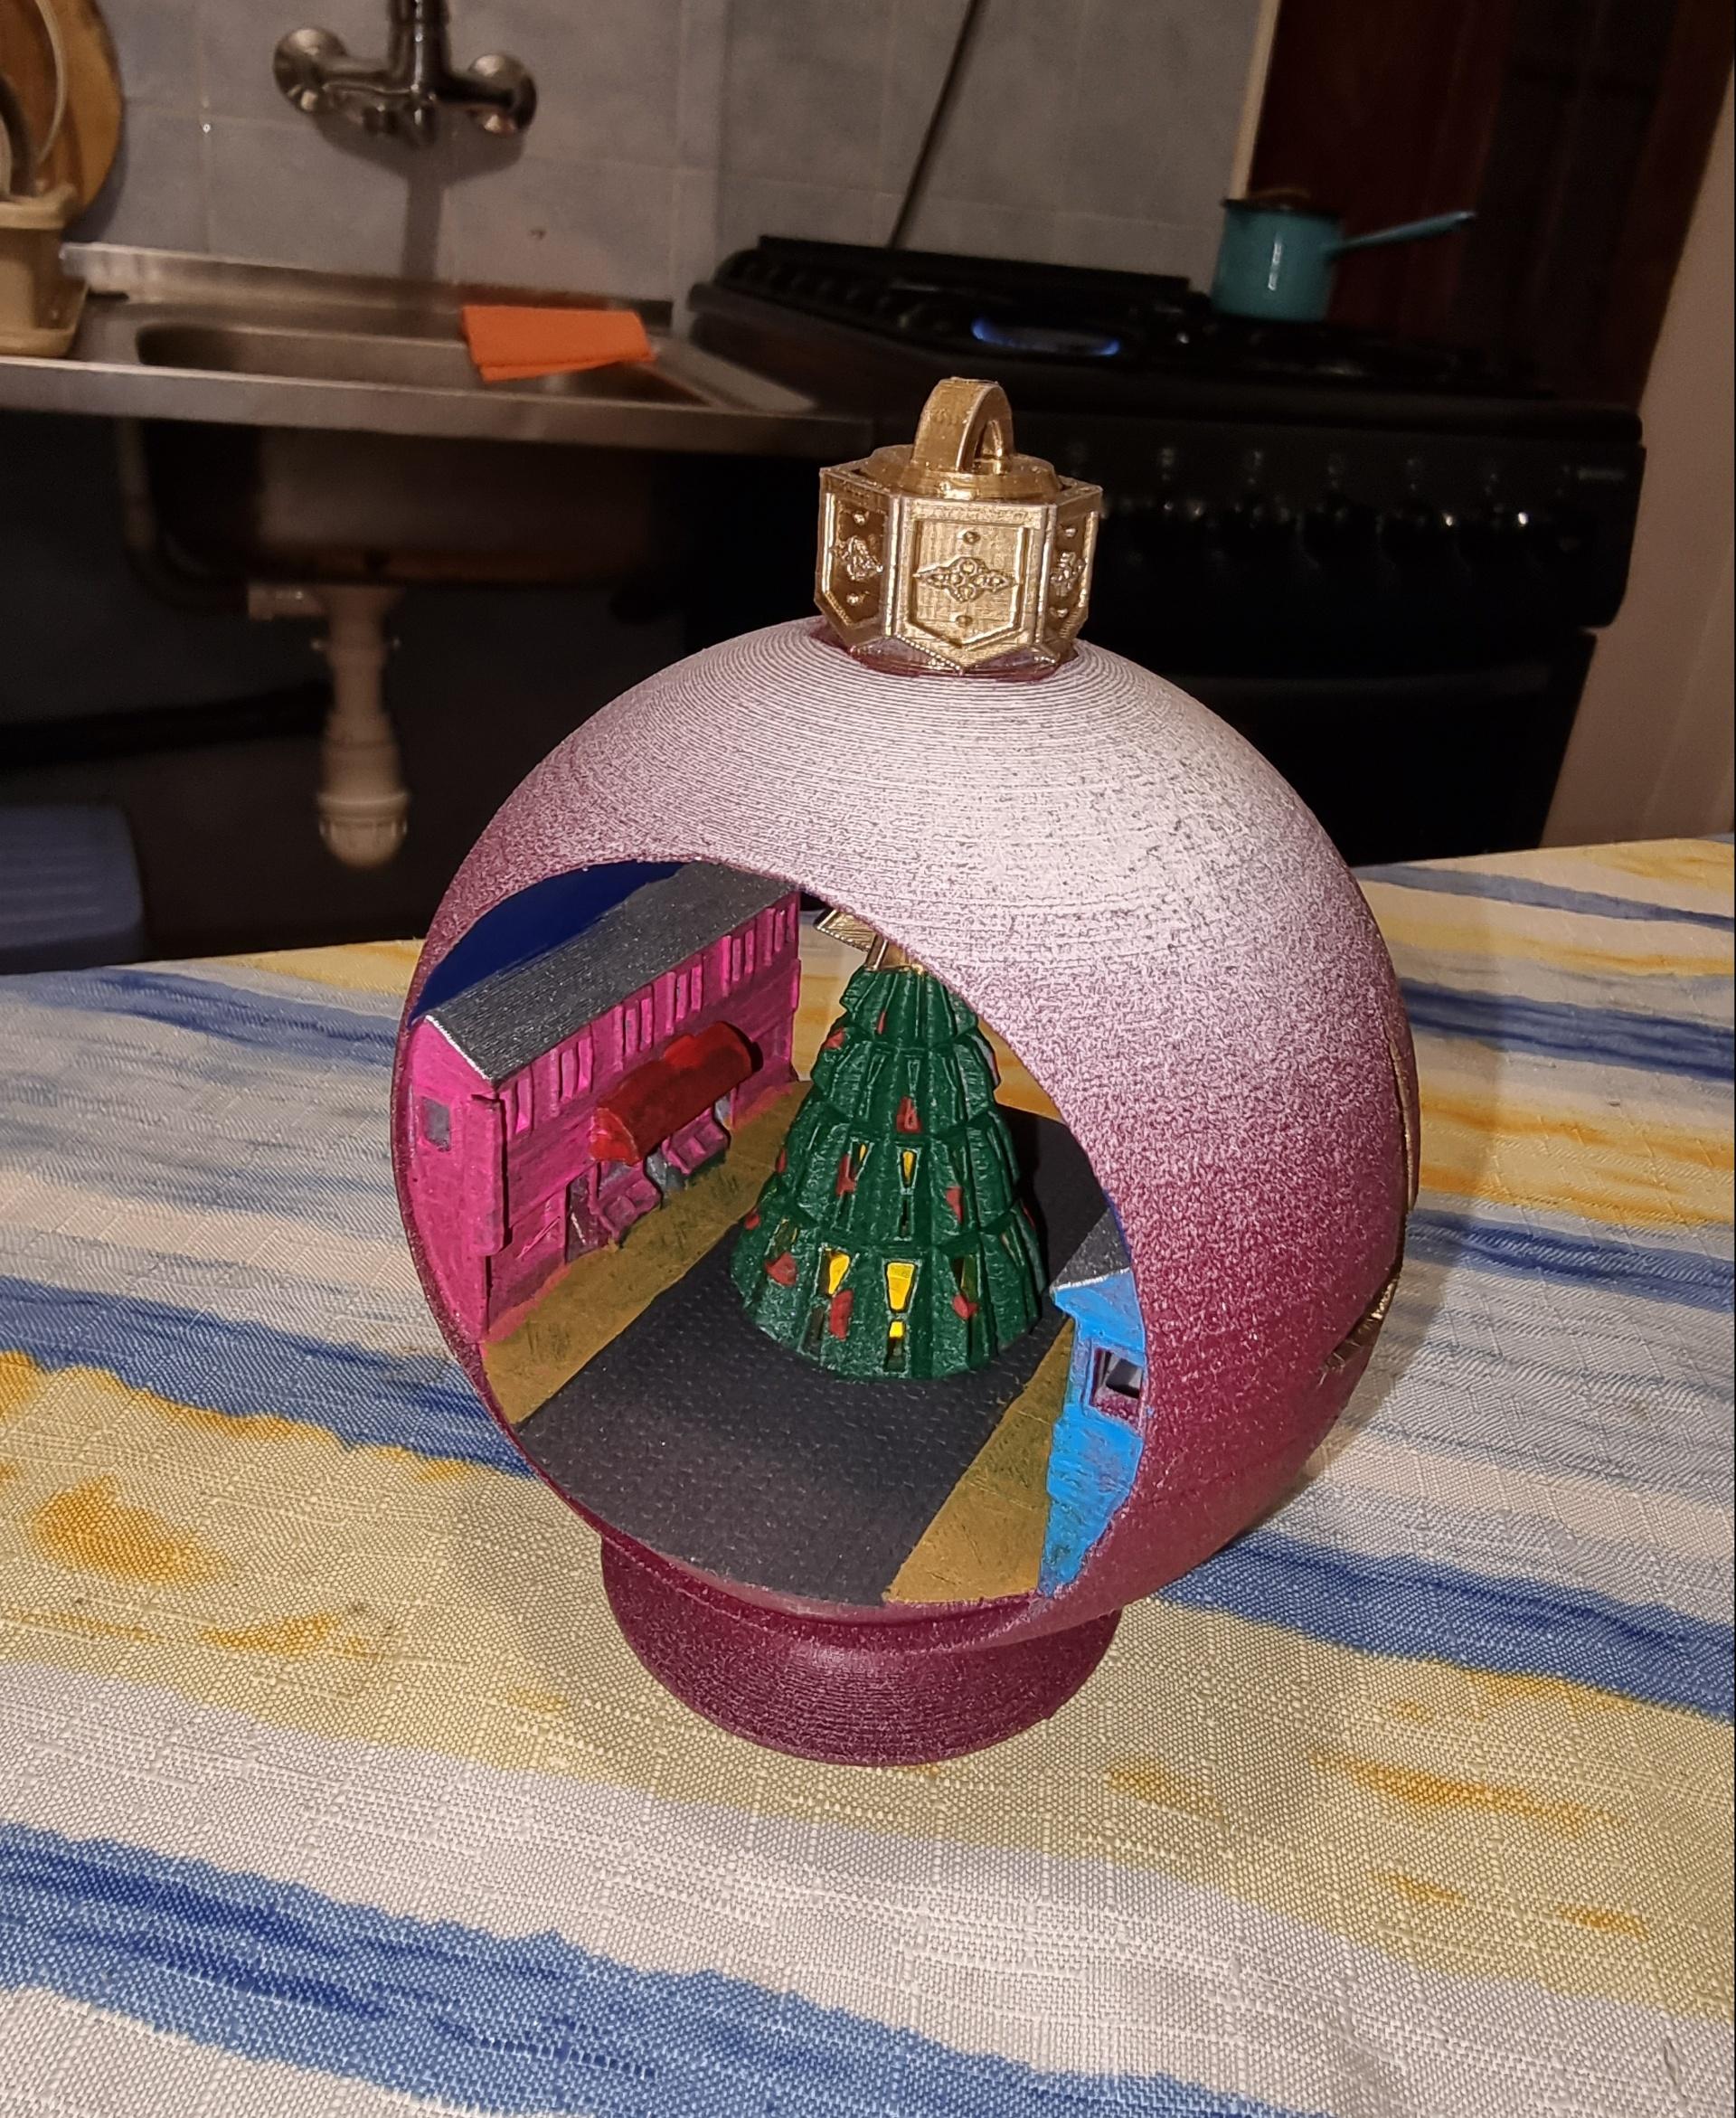 Snowglobe Votive Ornament - Xmas Town 3d model